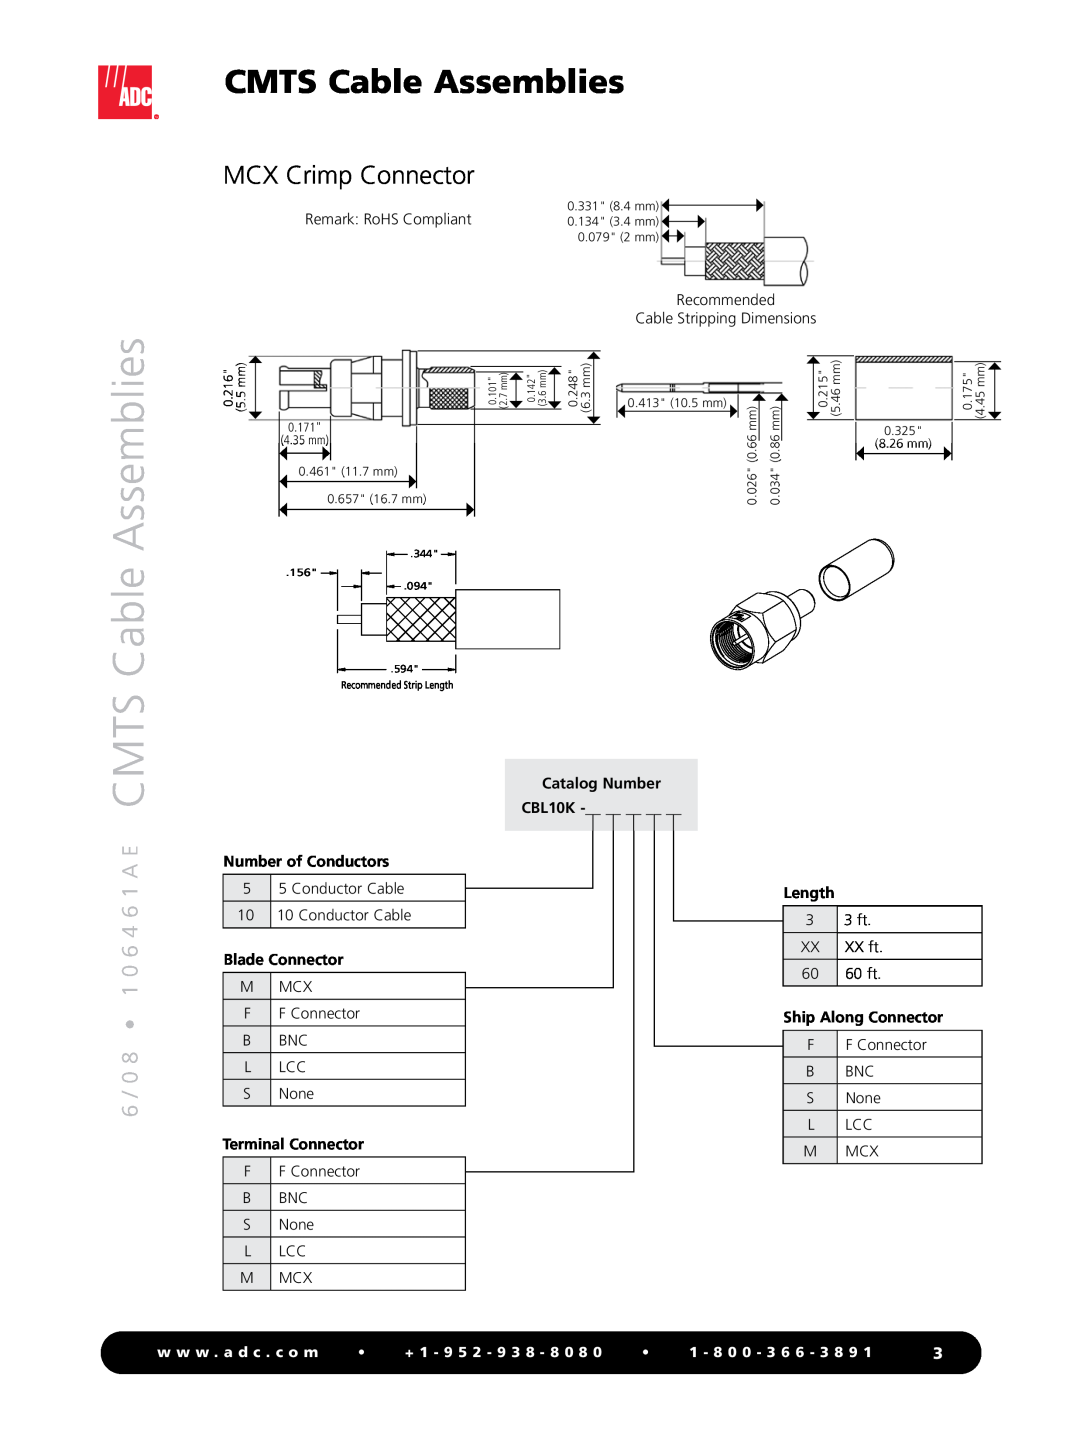 ADC manual MCX Crimp Connector, CMTS Cable Assemblies, w w w . a d c . c o m, + 1 - 9 5 2 - 9 3 8 - 8 0 